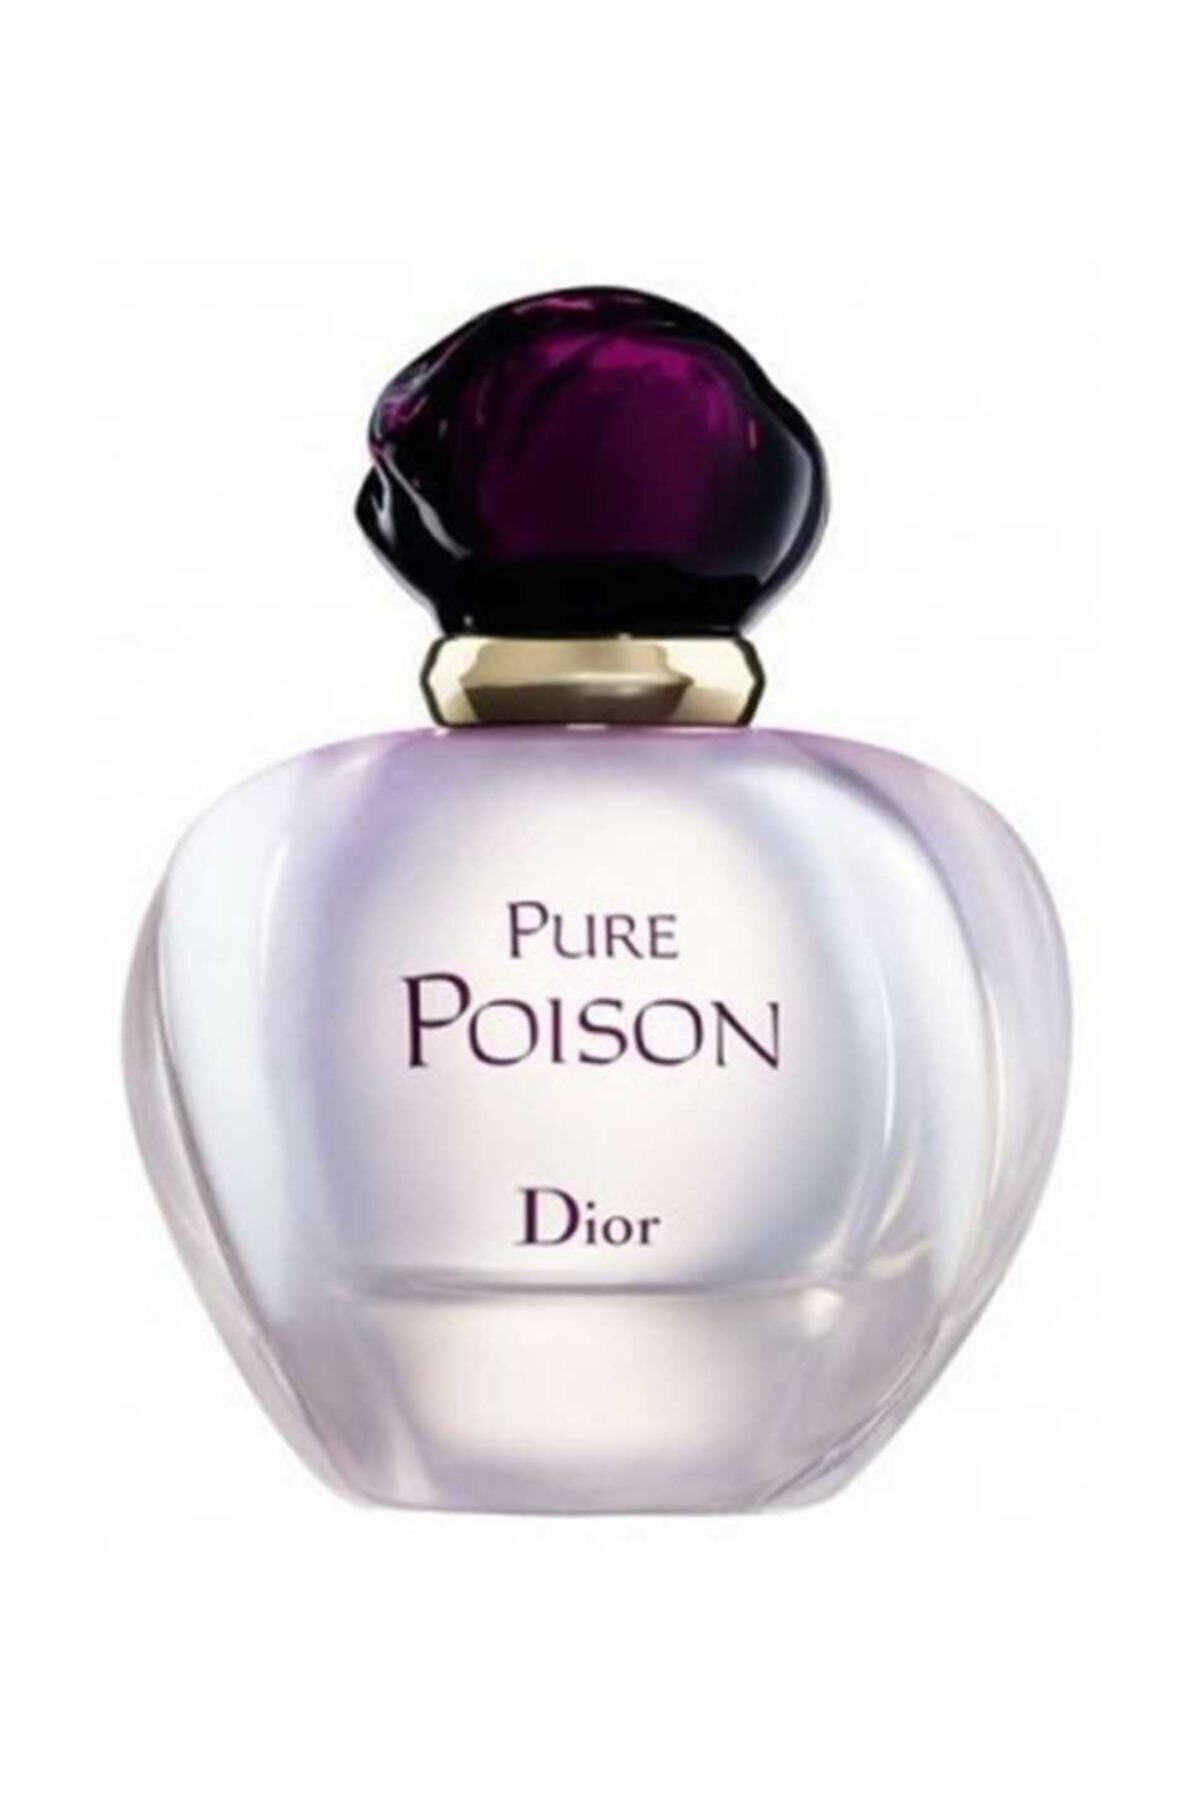 Dior PURE POİSON EDP 100 ML UNİQUE FRAGRANCE WOMEN'S PERFUME DEMBA1225